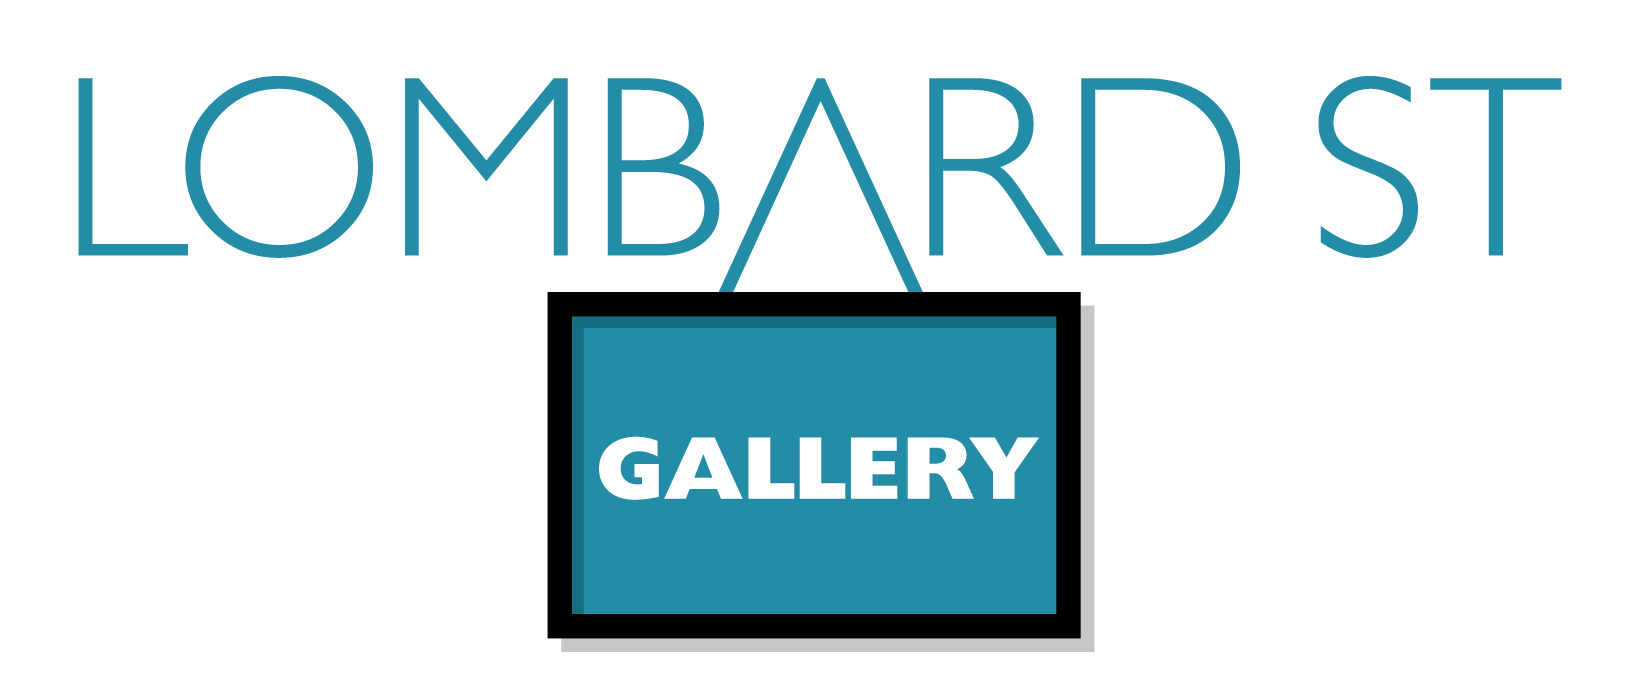 Lombard Street Gallery_Logo_Margate NOW festival 2019